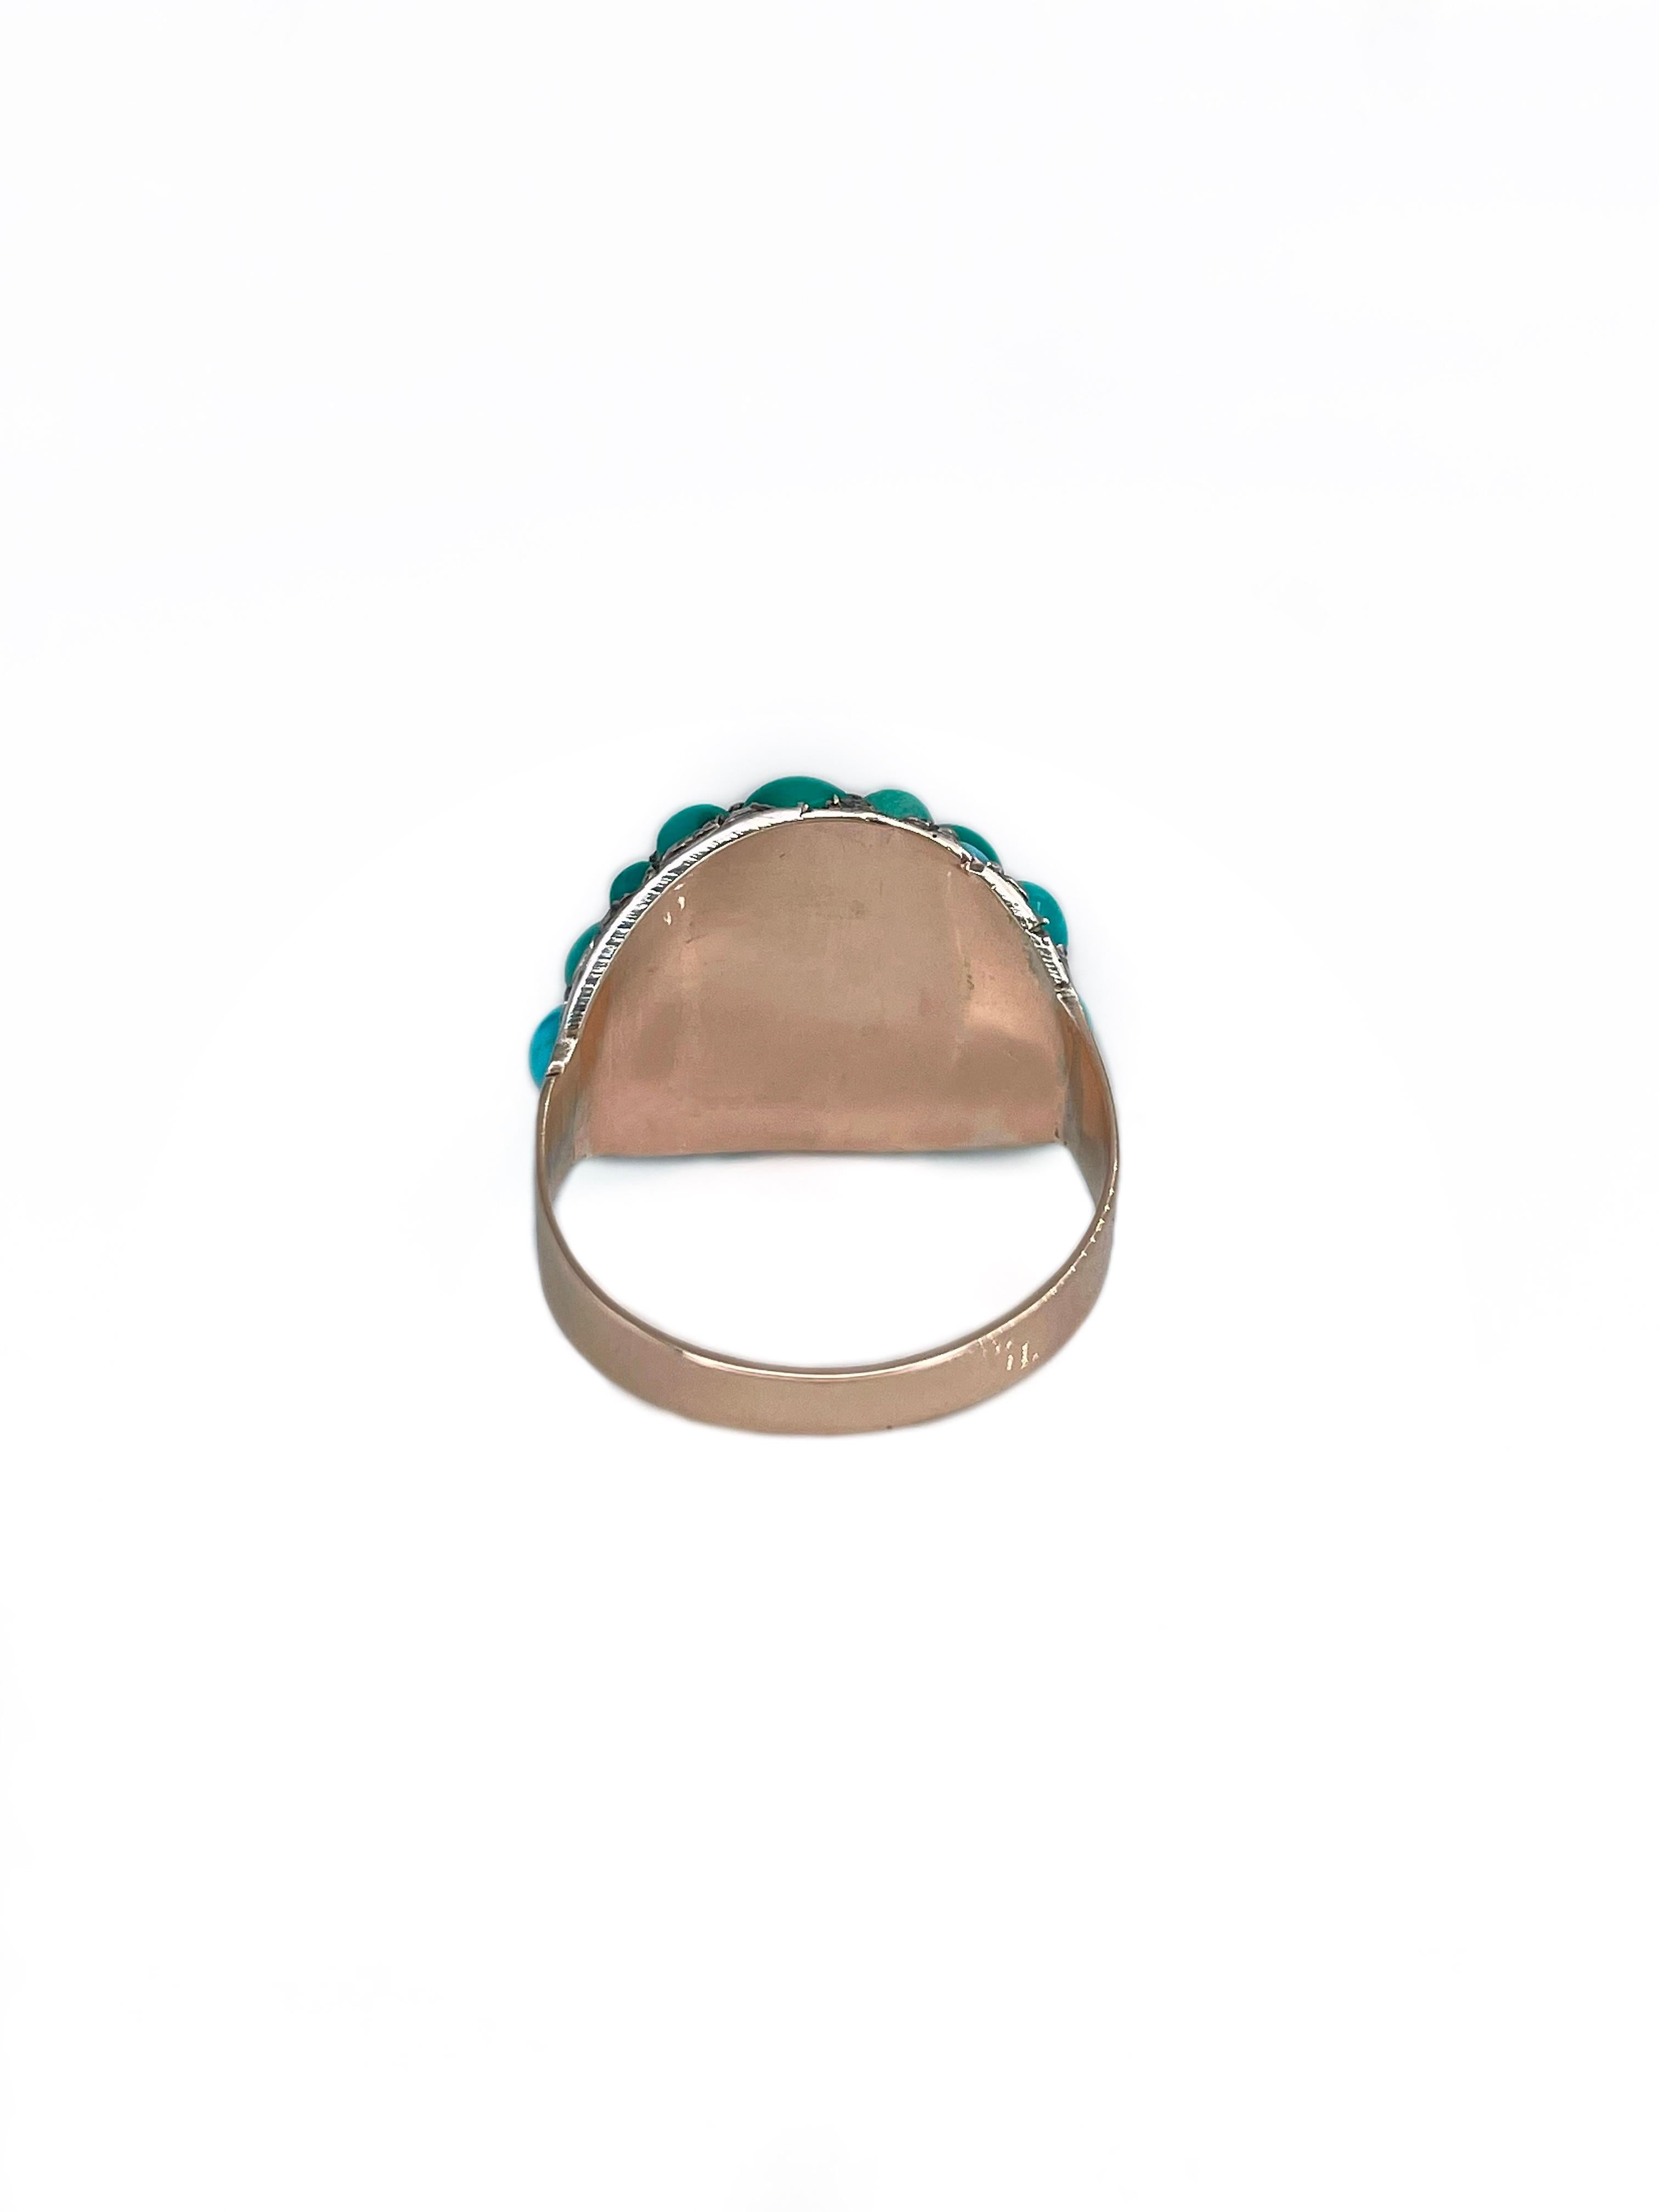 Women's Victorian 14 Karat Gold Pavé Set Turquoise Dome Ring For Sale